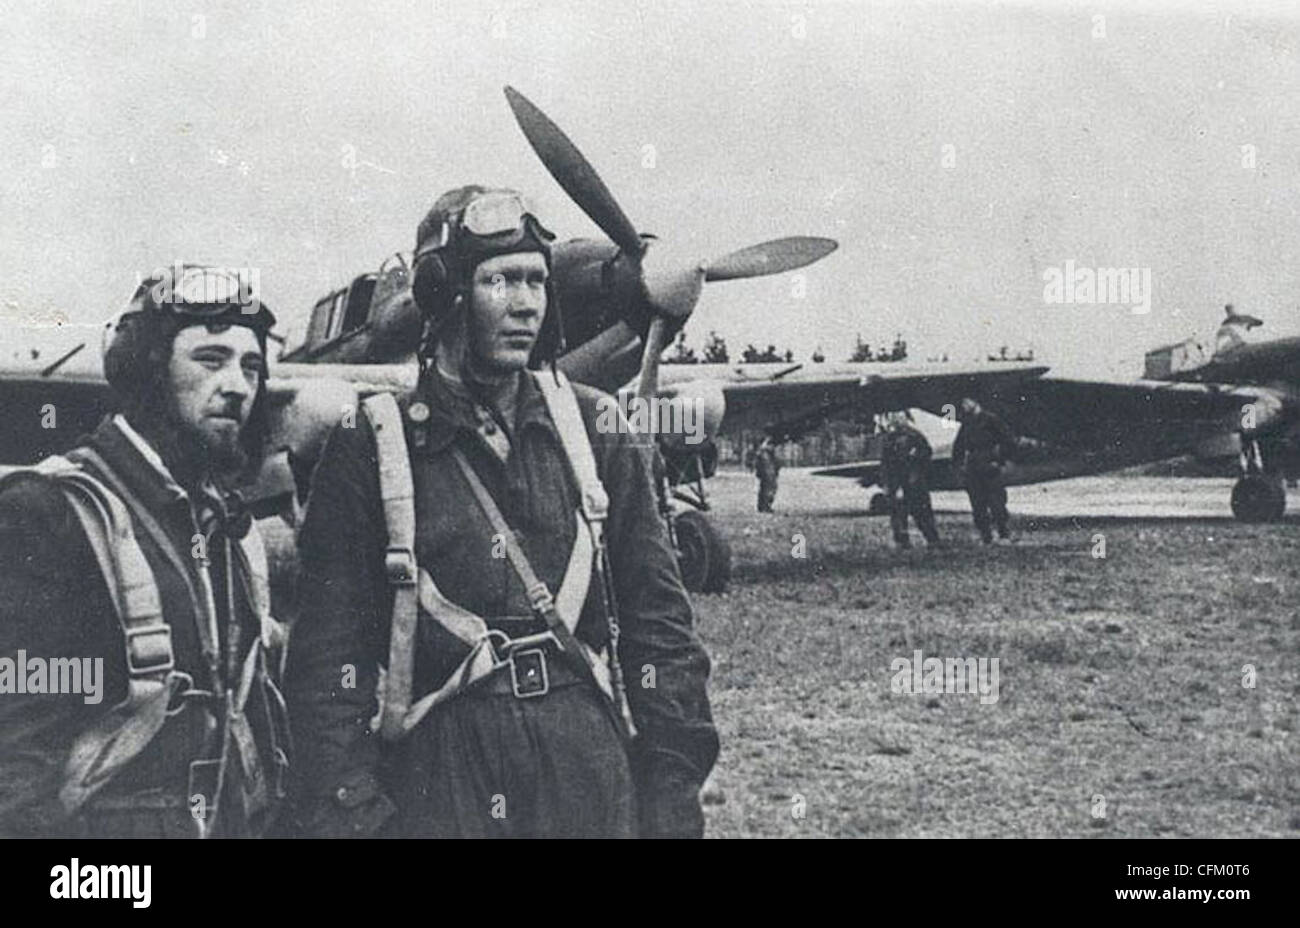 Многим летчикам великой. Летчики войны 1941-1945. Летчики ВОВ 1941-1945. Военные летчики в ВОВ 1941-1945. Летчики 1941-1945 Махалин.